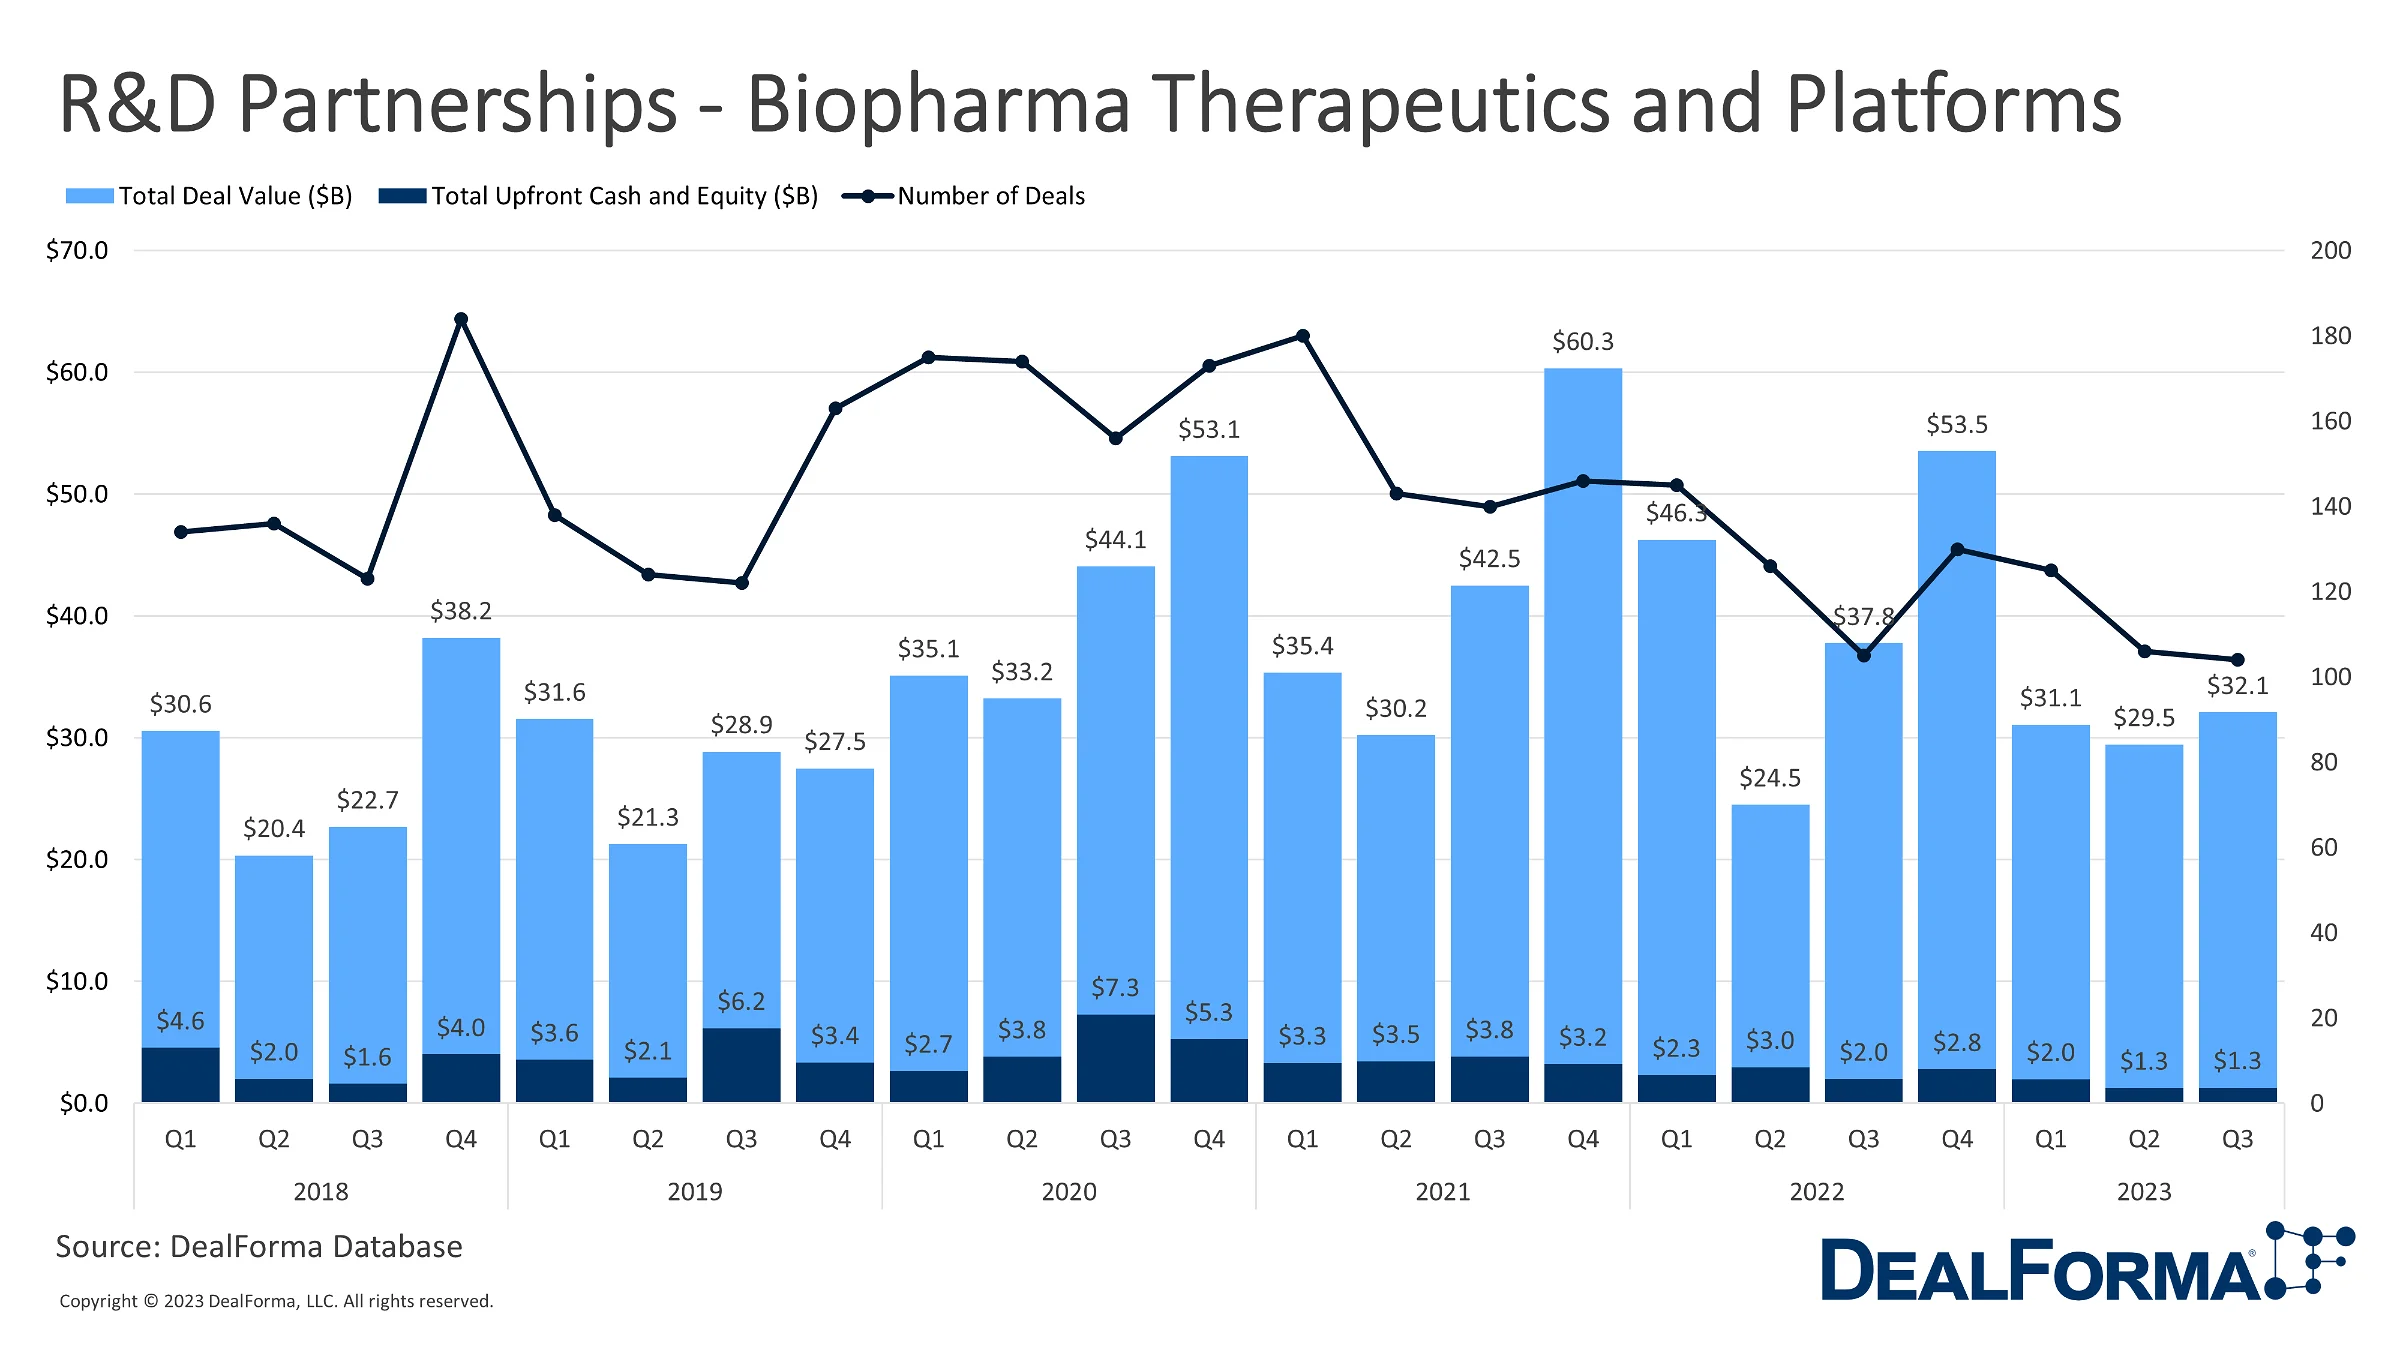 RD Partnerships Biopharma Therapeutics and Platforms